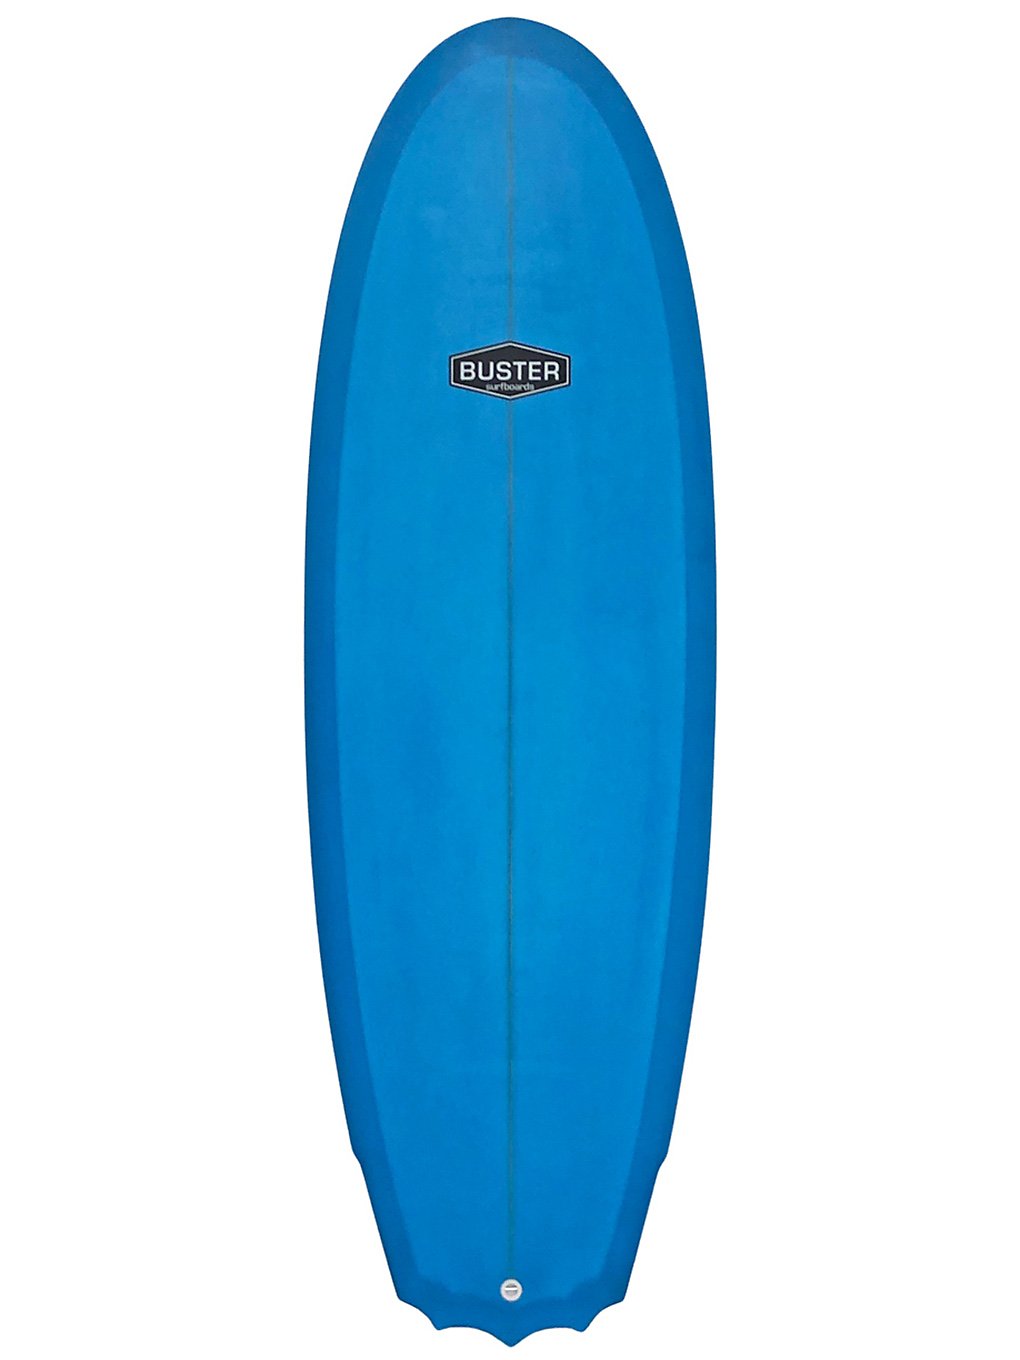 Buster 5'8 Stubby Surfboard blau